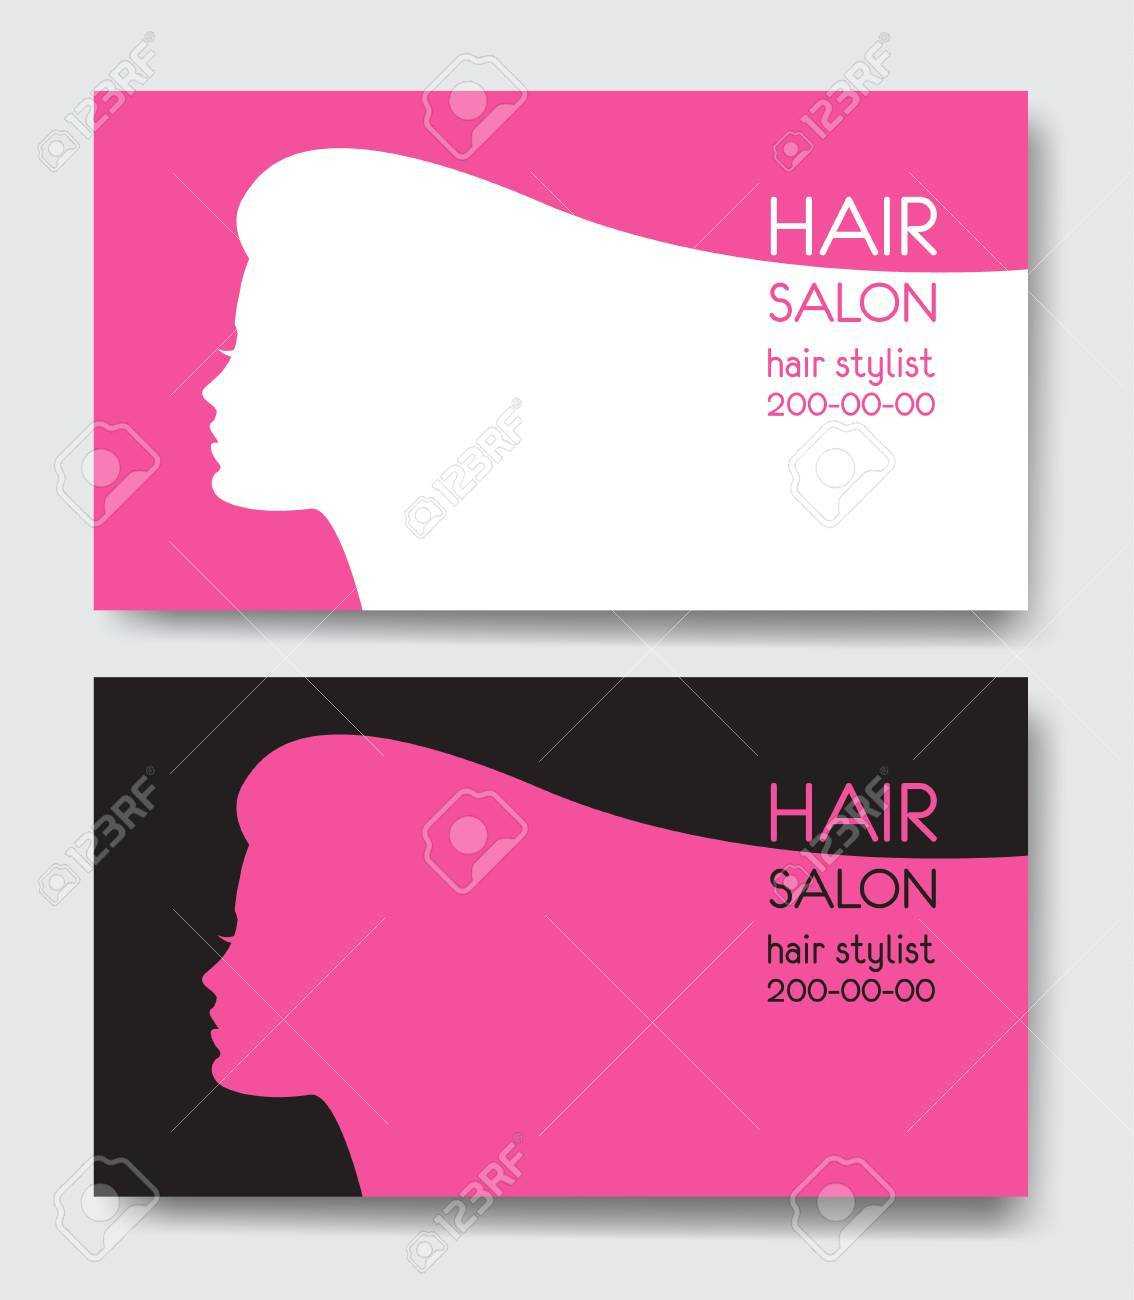 Hair Salon Business Card Templates. Pertaining To Hairdresser Business Card Templates Free